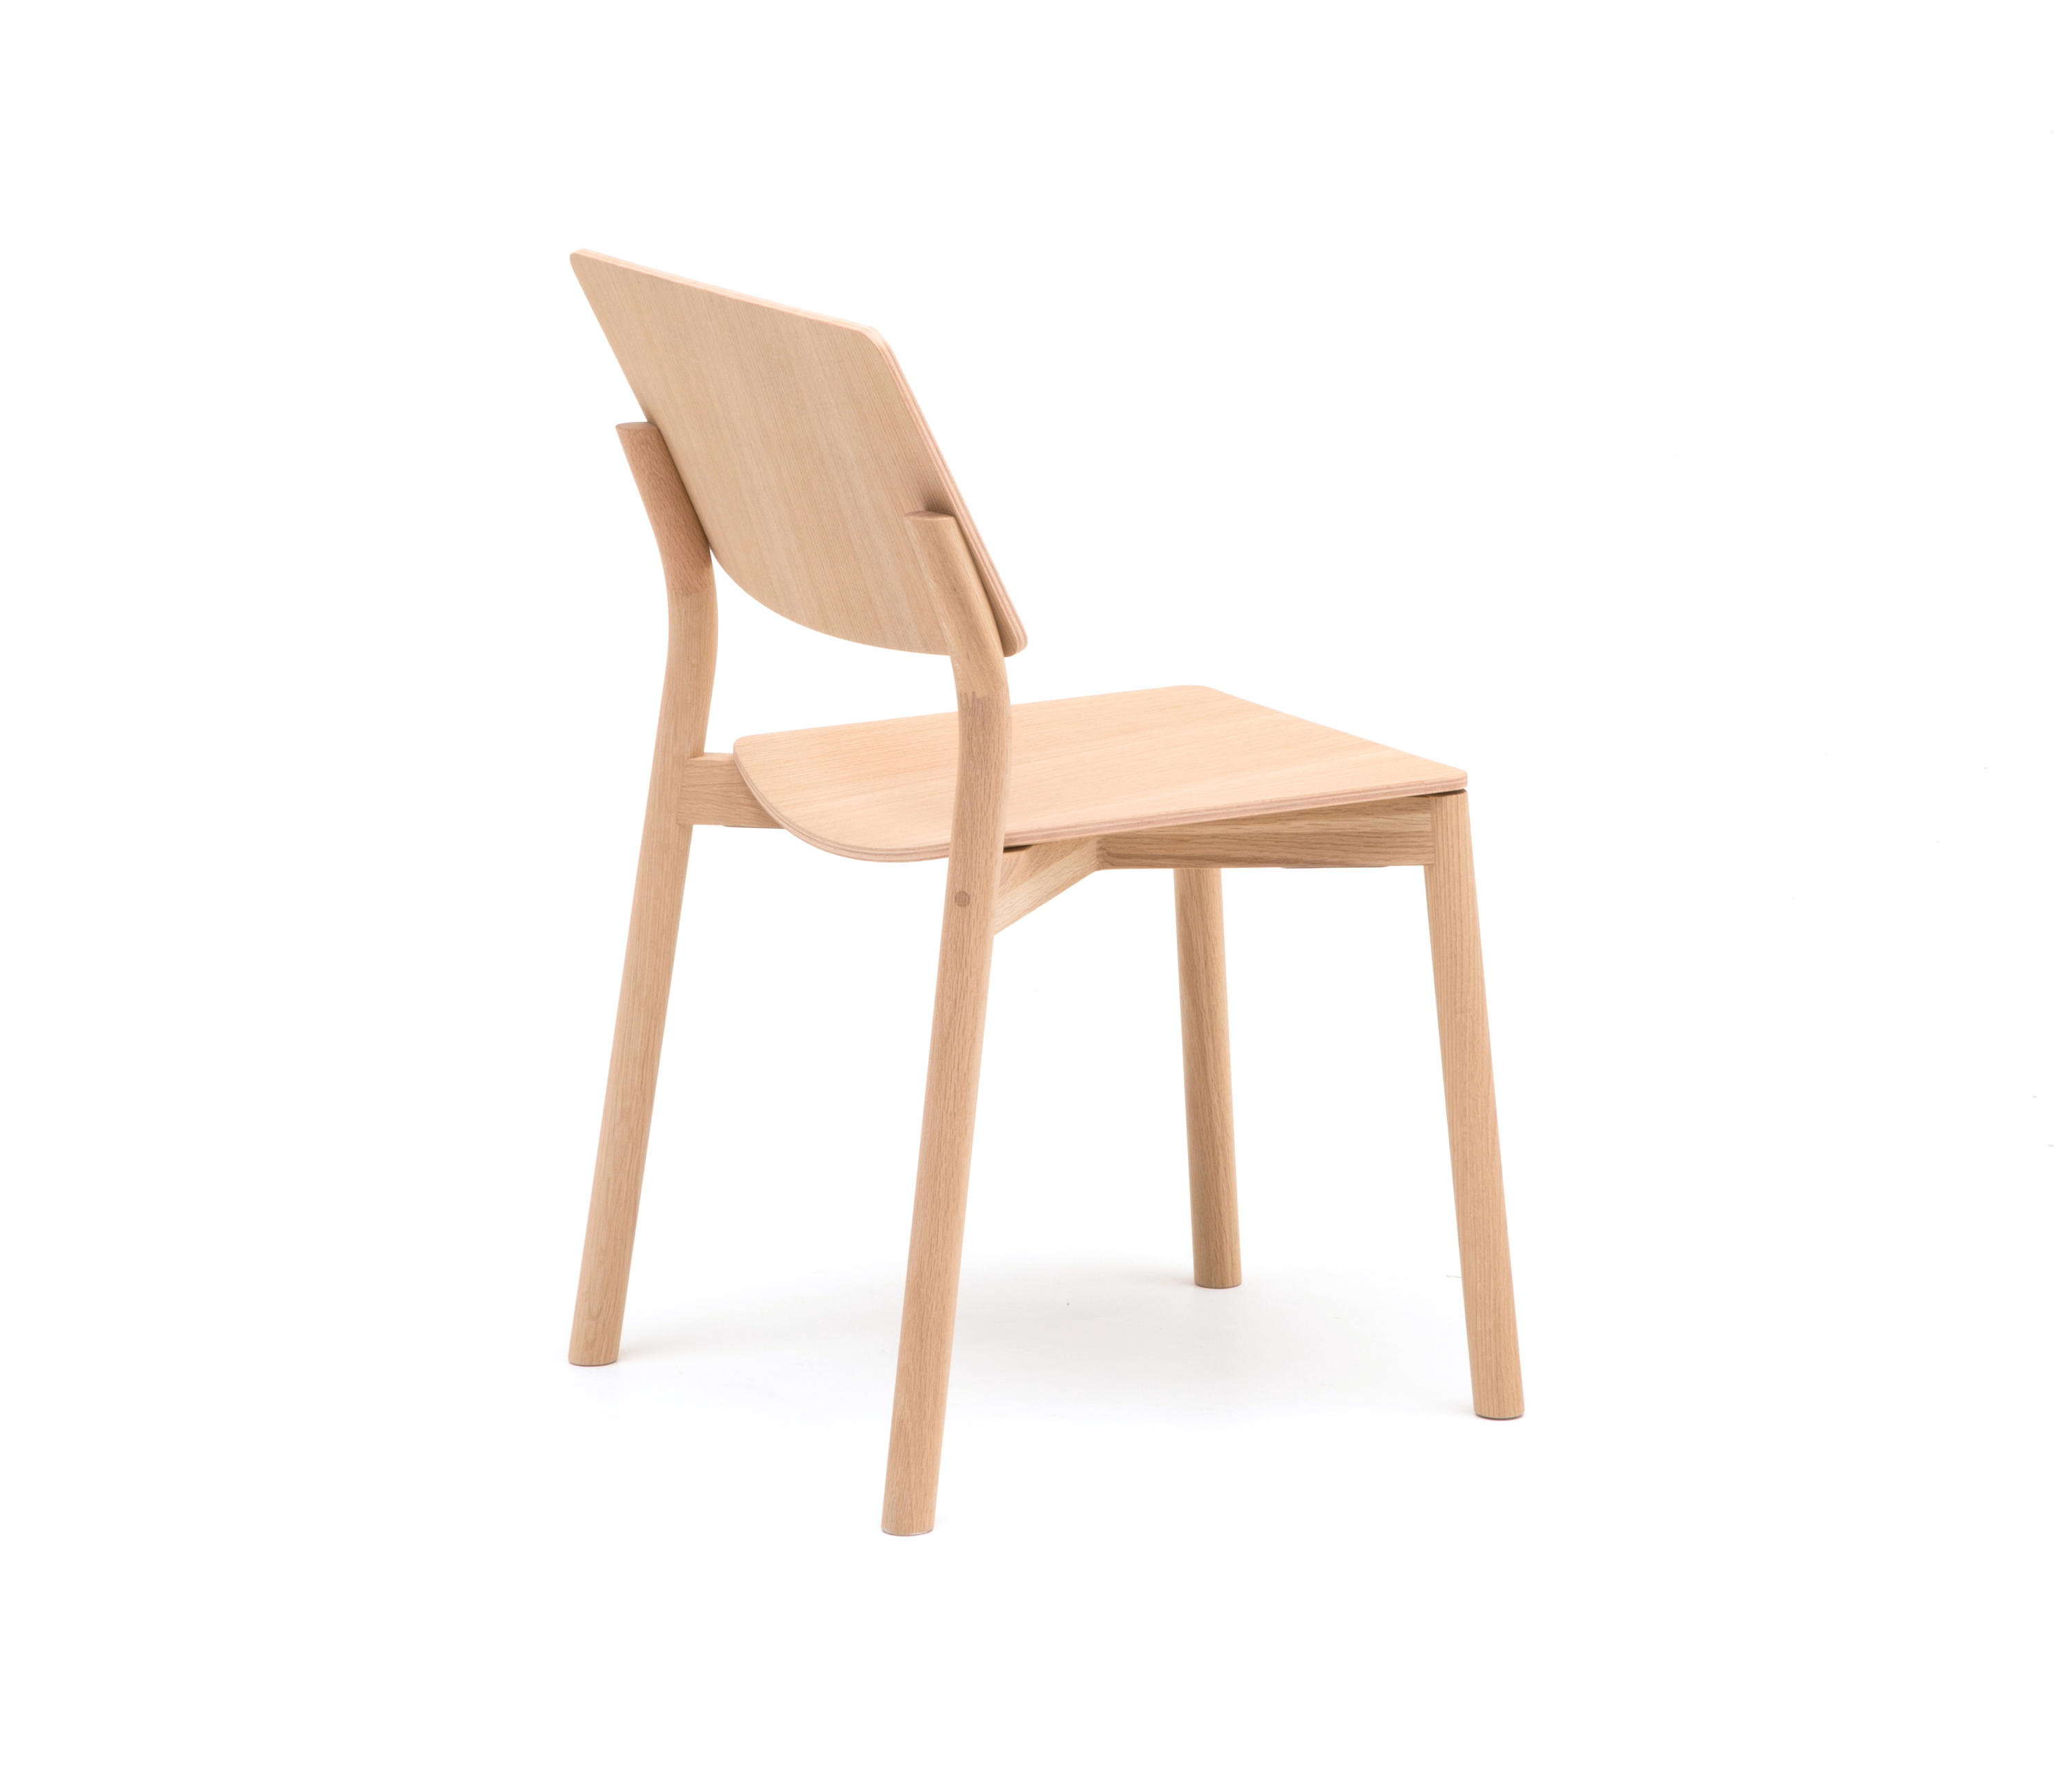 PANORAMA CHAIR - Chairs from Karimoku New Standard | Architonic